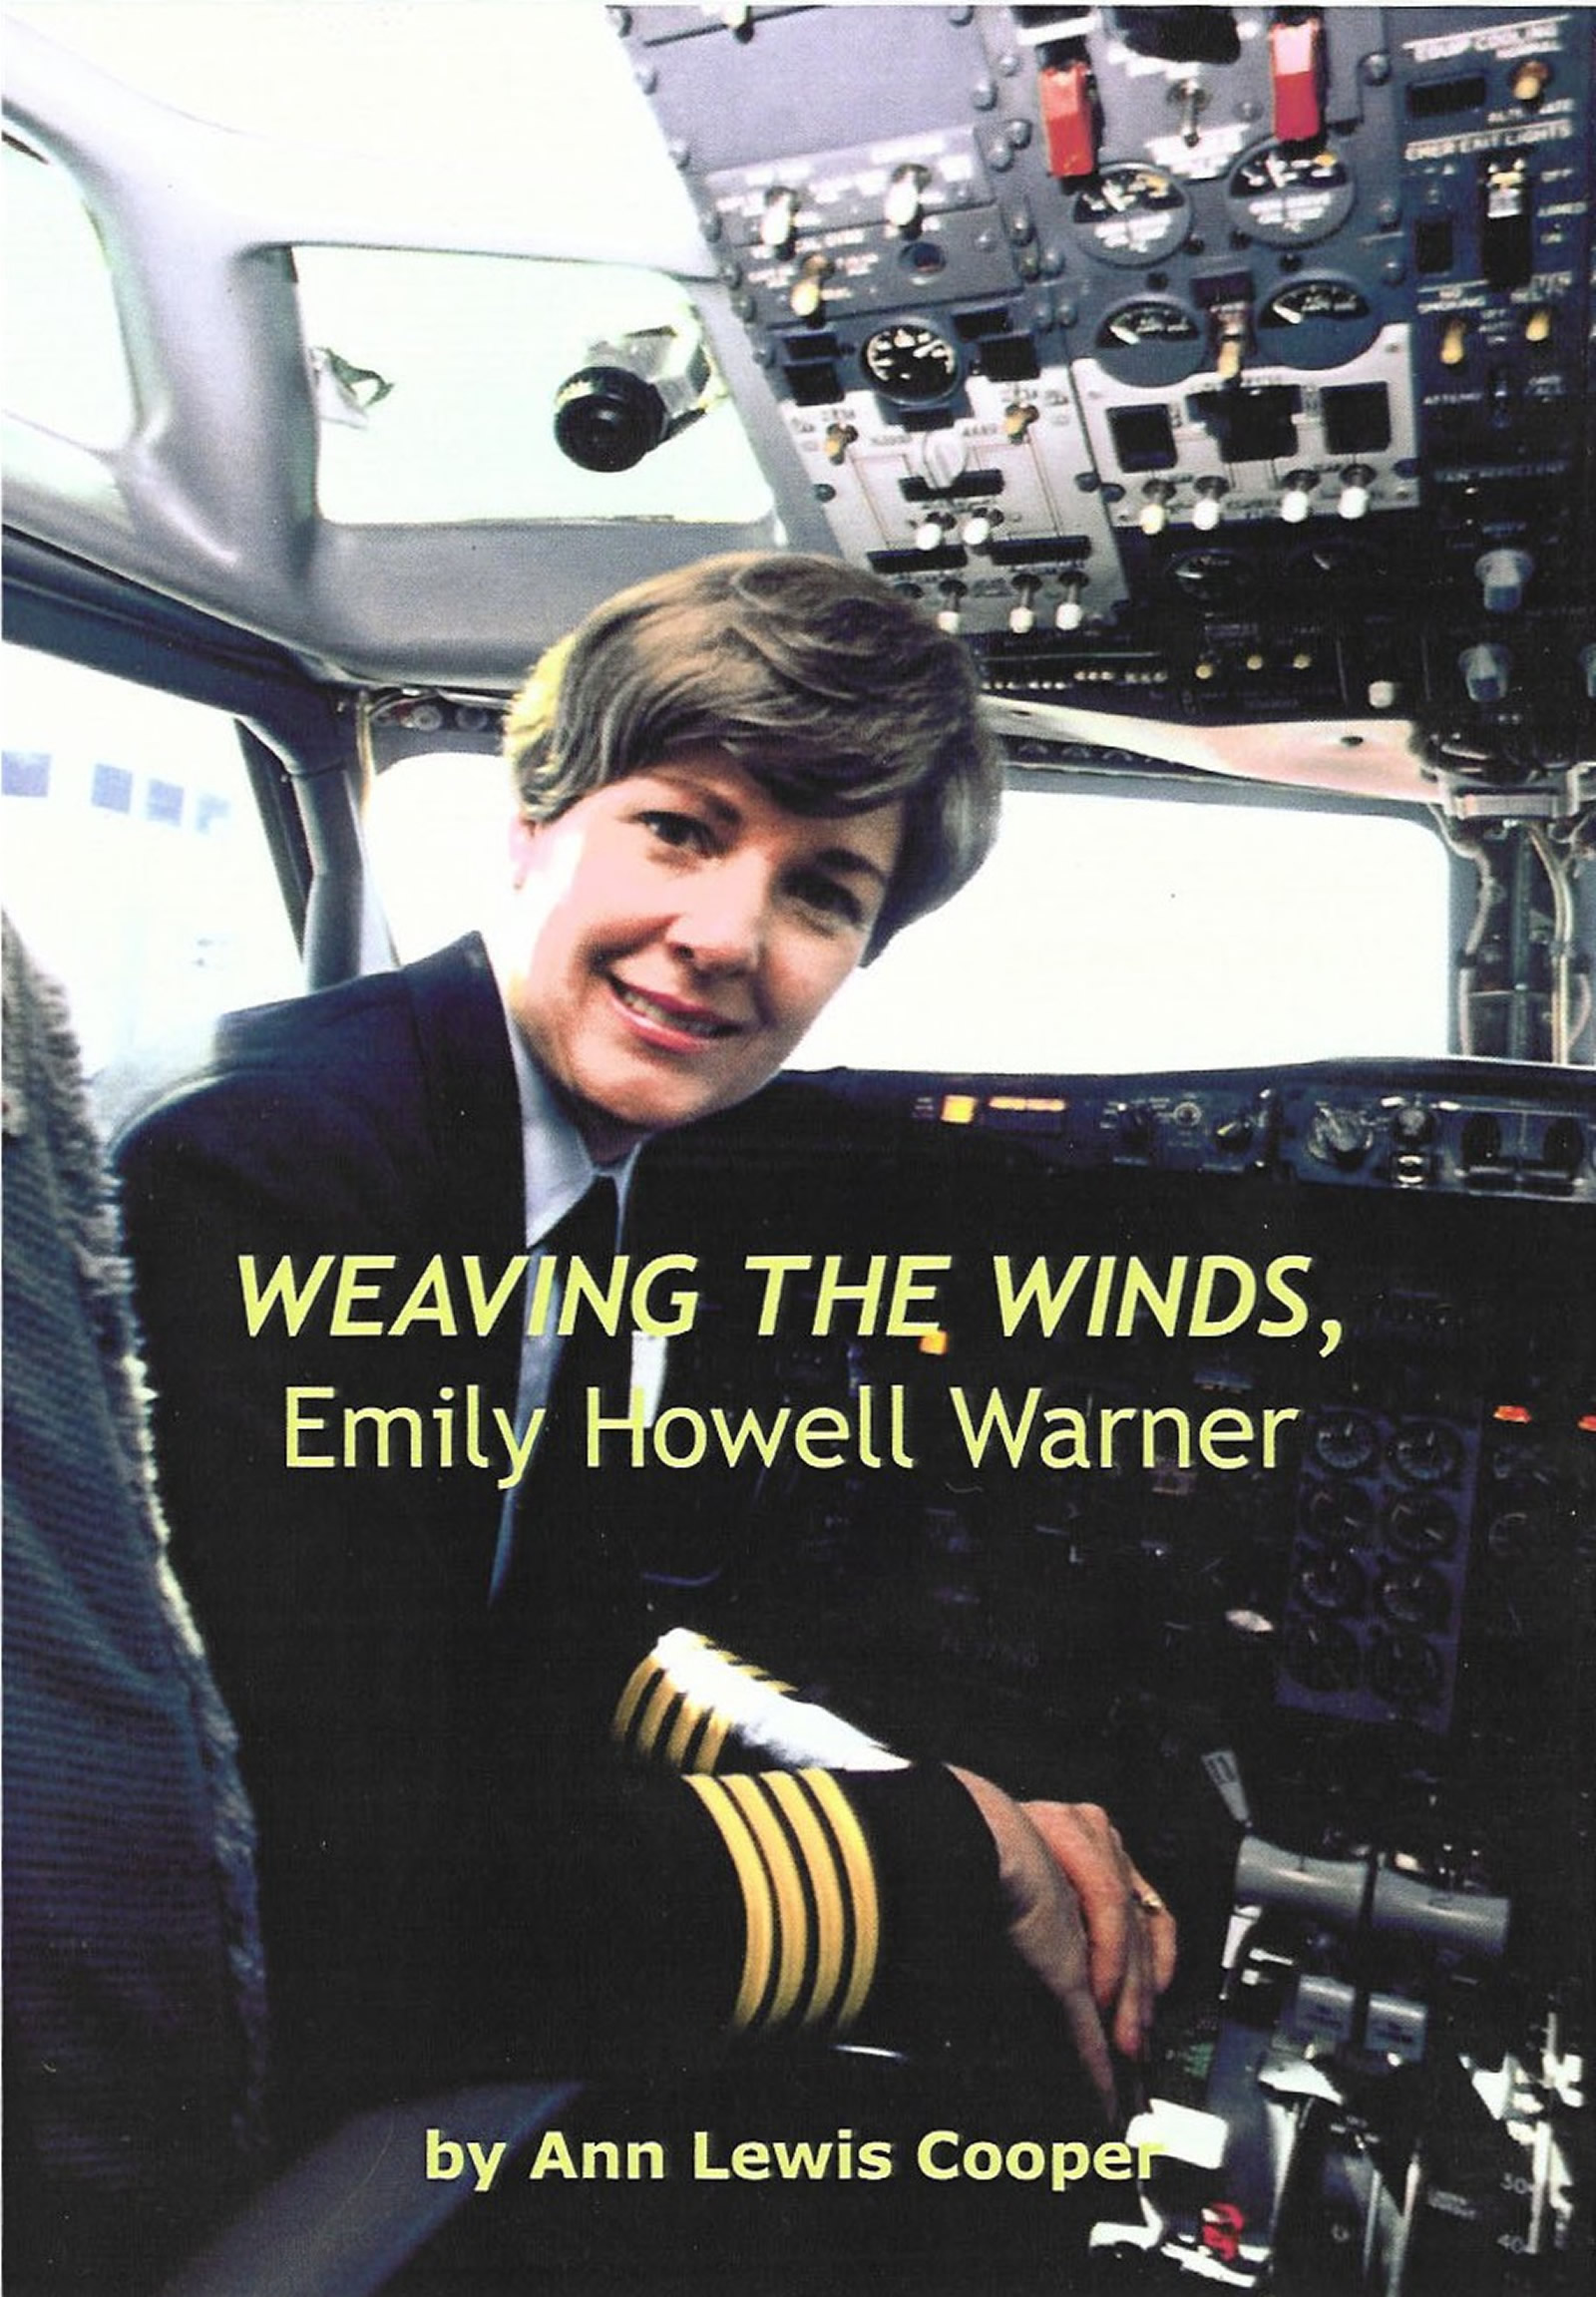 Emily Howell Warner: “Weaving the Winds”